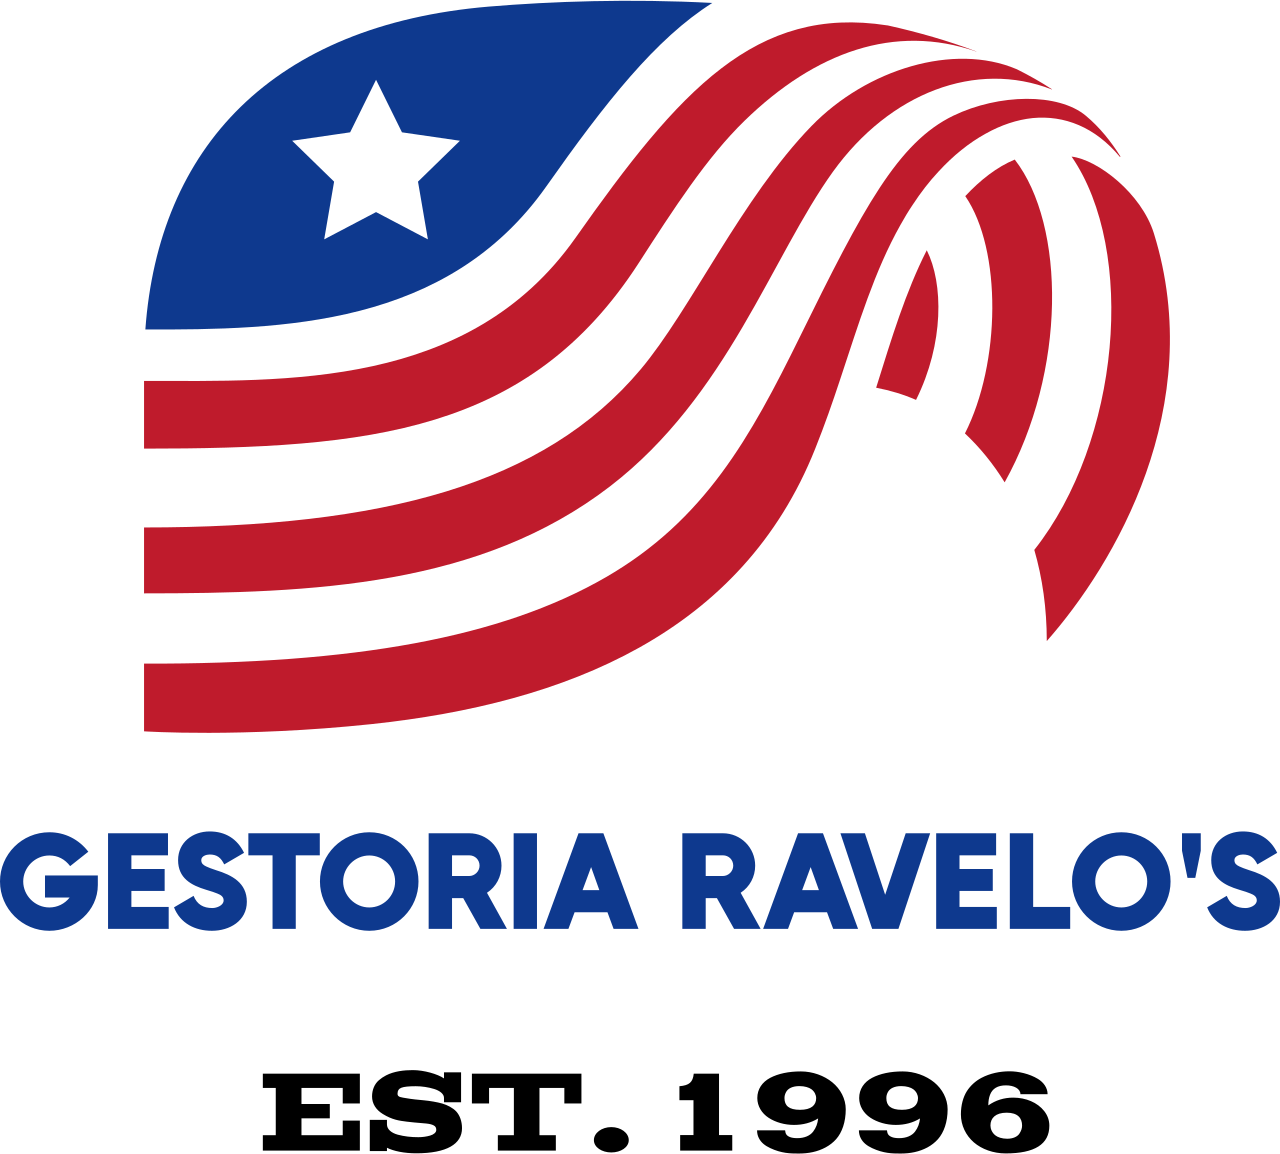 GESTORIA RAVELO'S 's web page